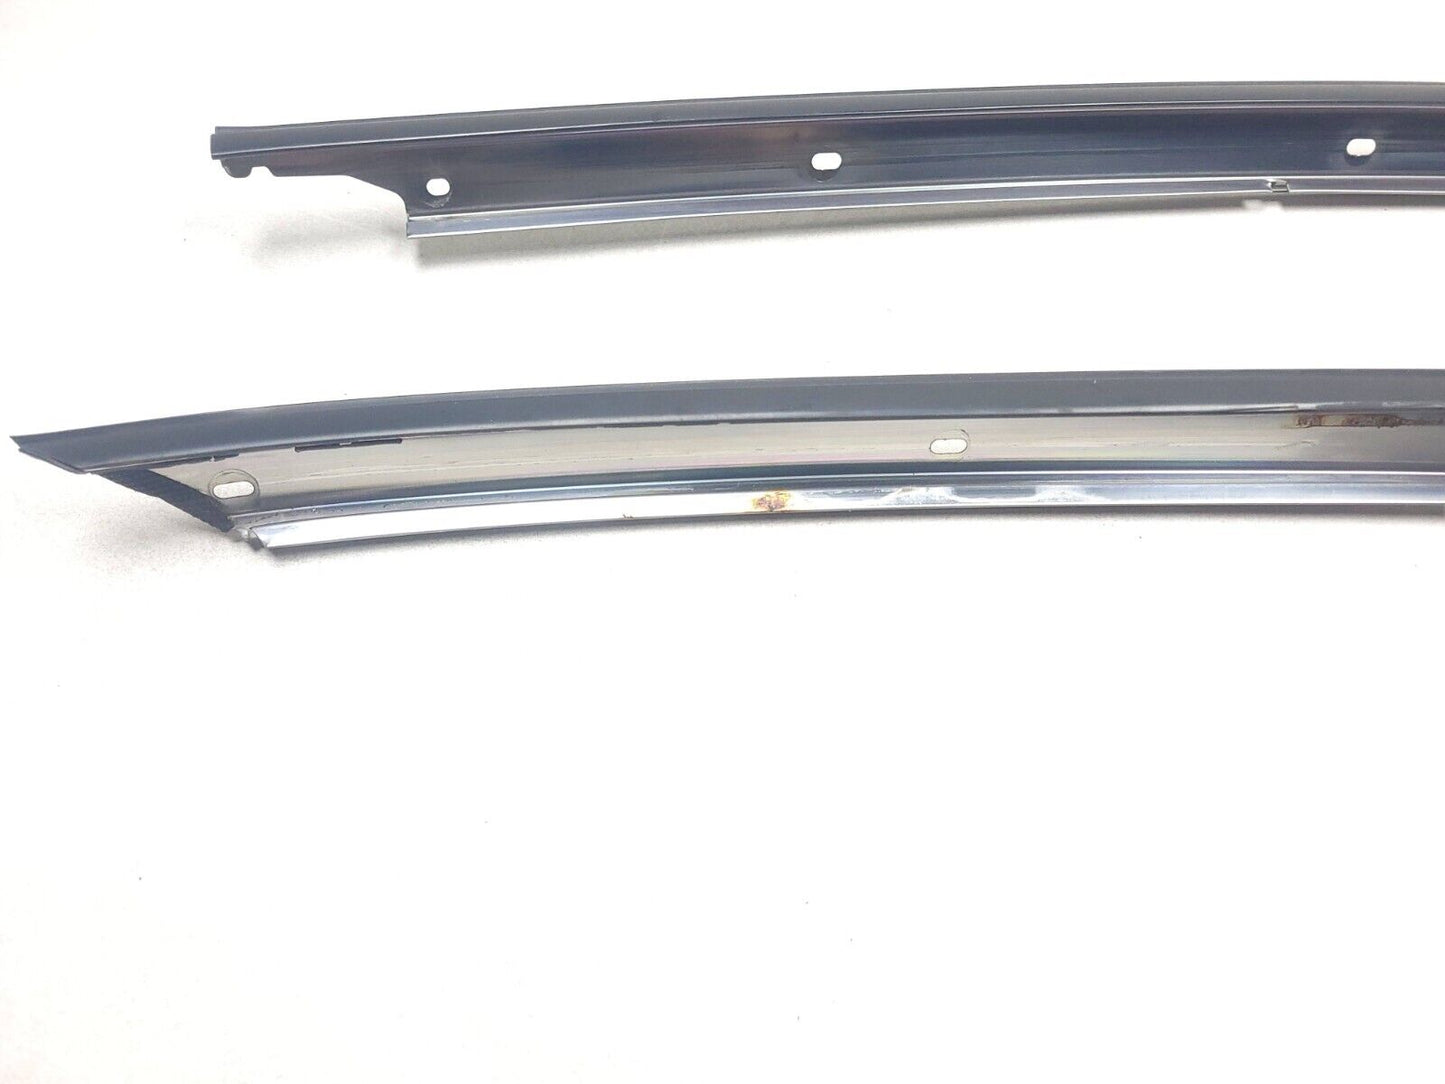 2013-2016 Genesis Coupe Door Frame Trim Molding Left & Right Side OEM